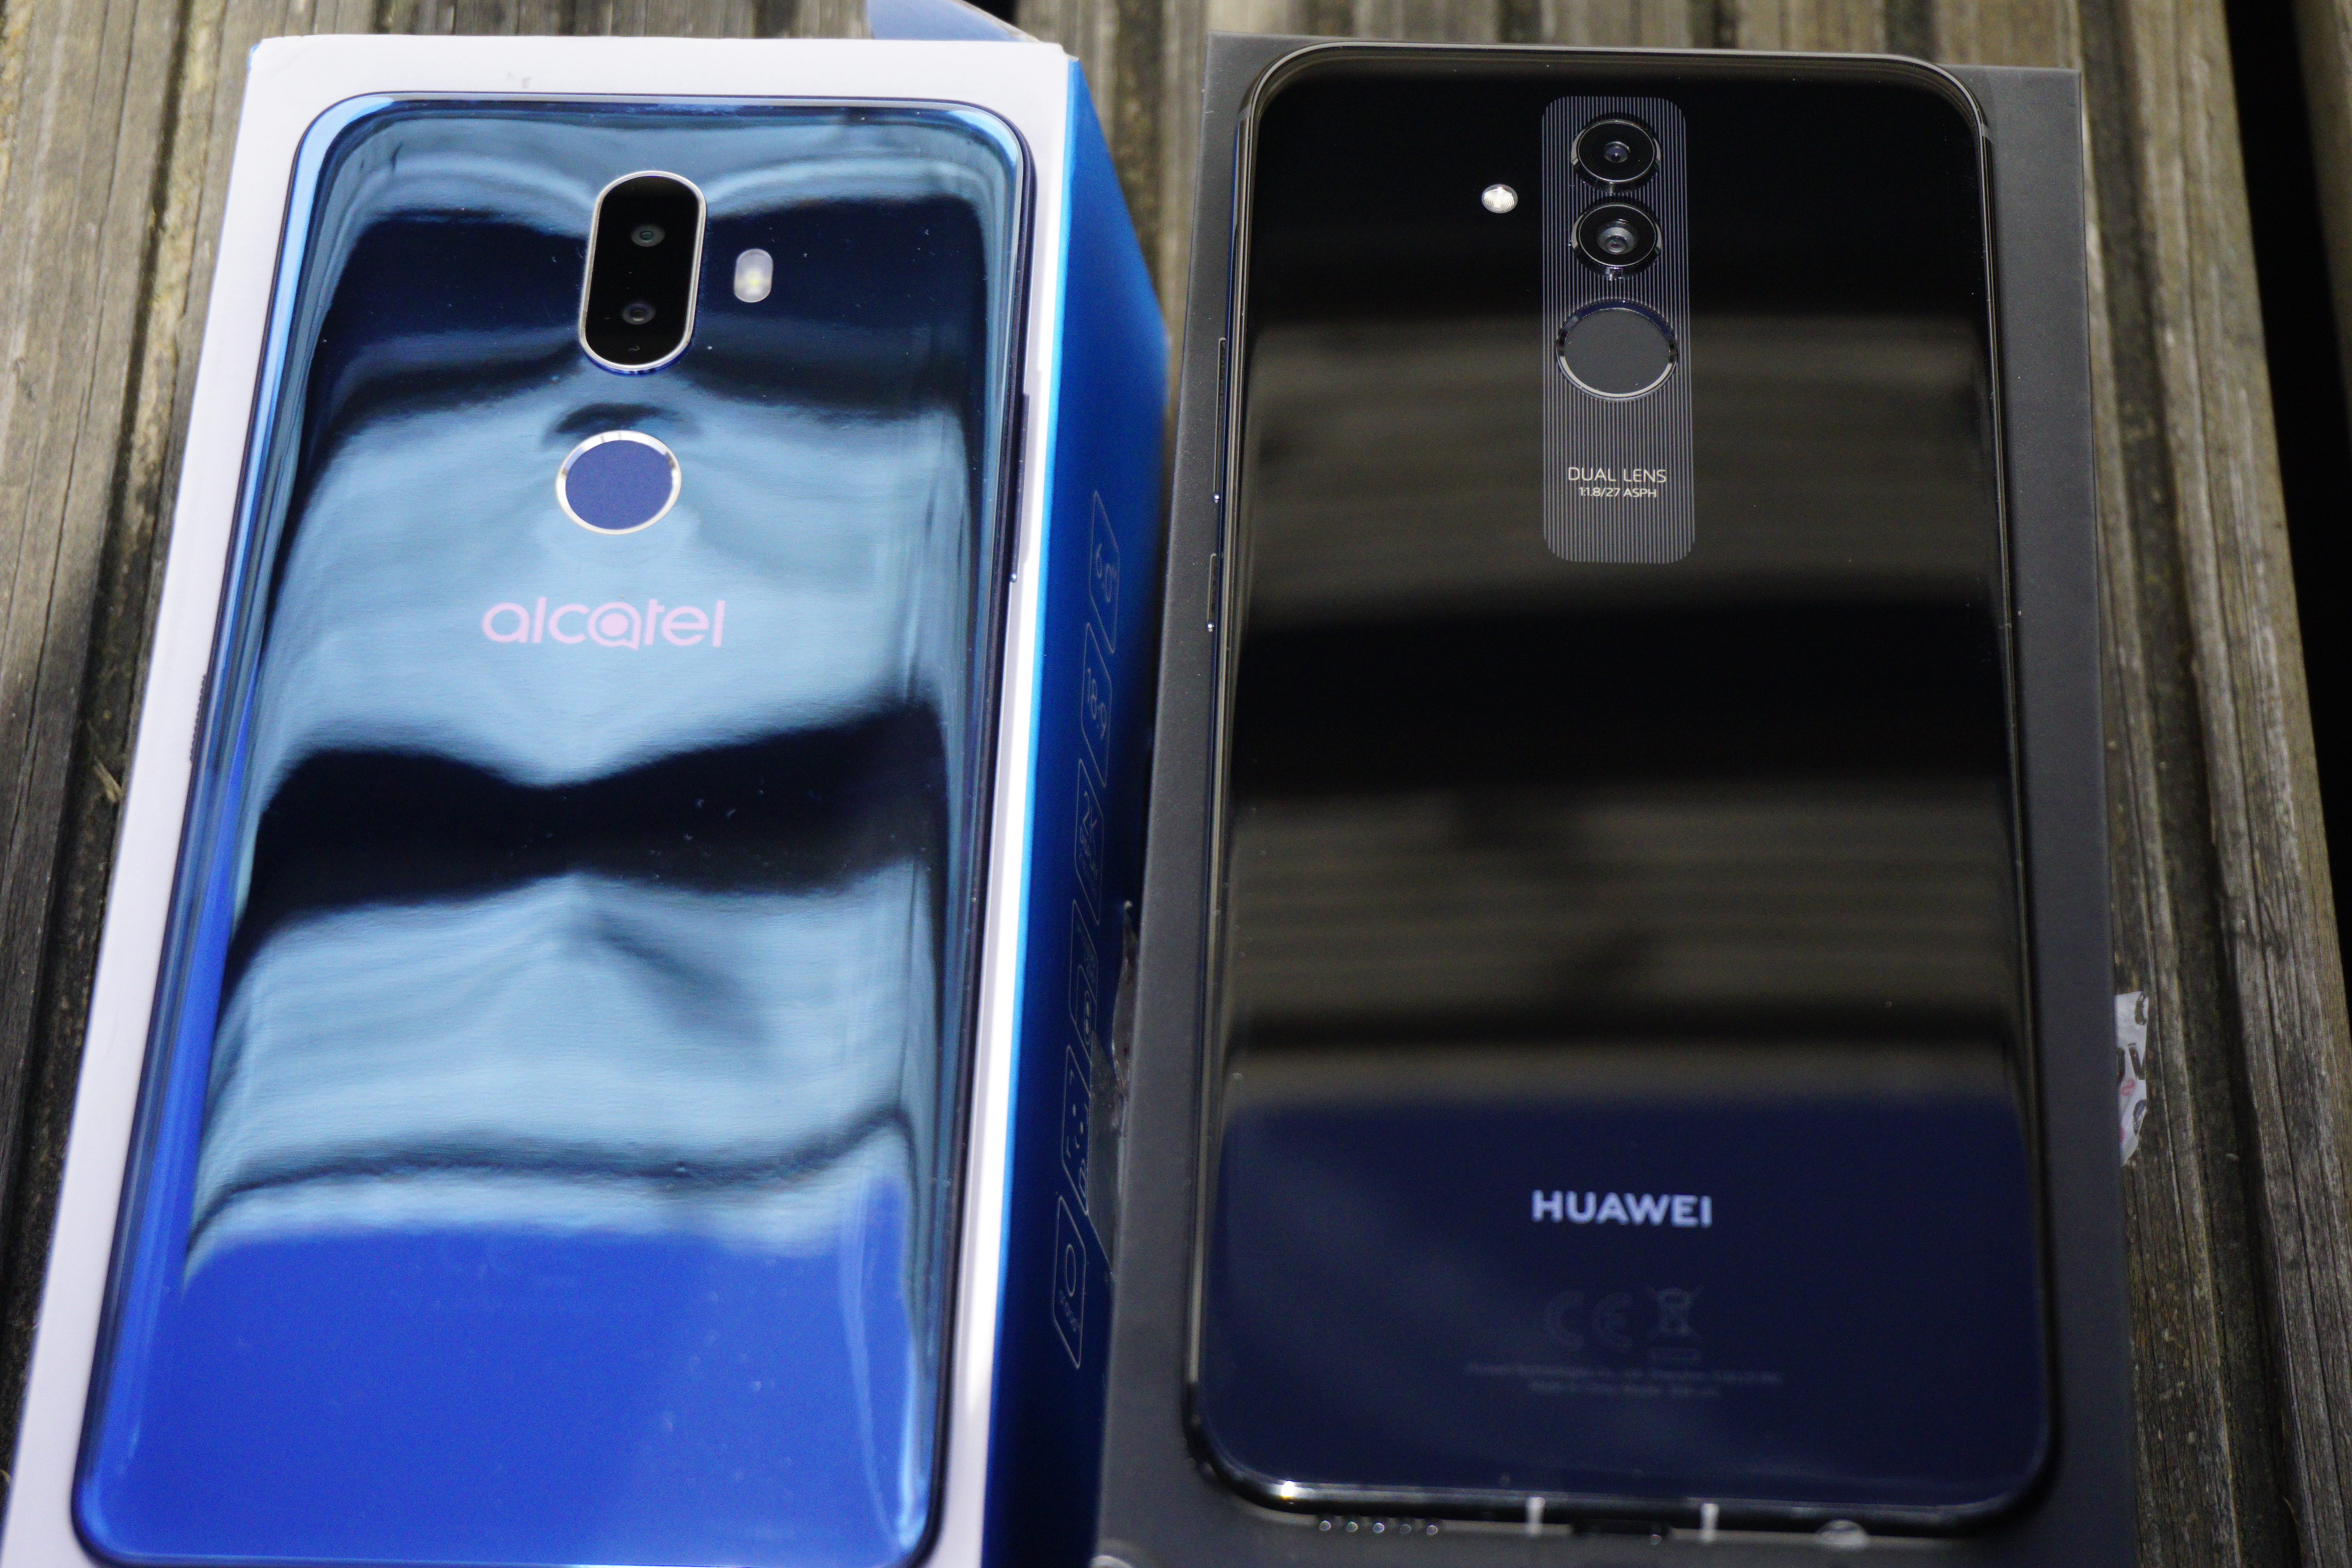 Budget Phone talk: Huawei Mate 20 Lite vs Alcatel 3V